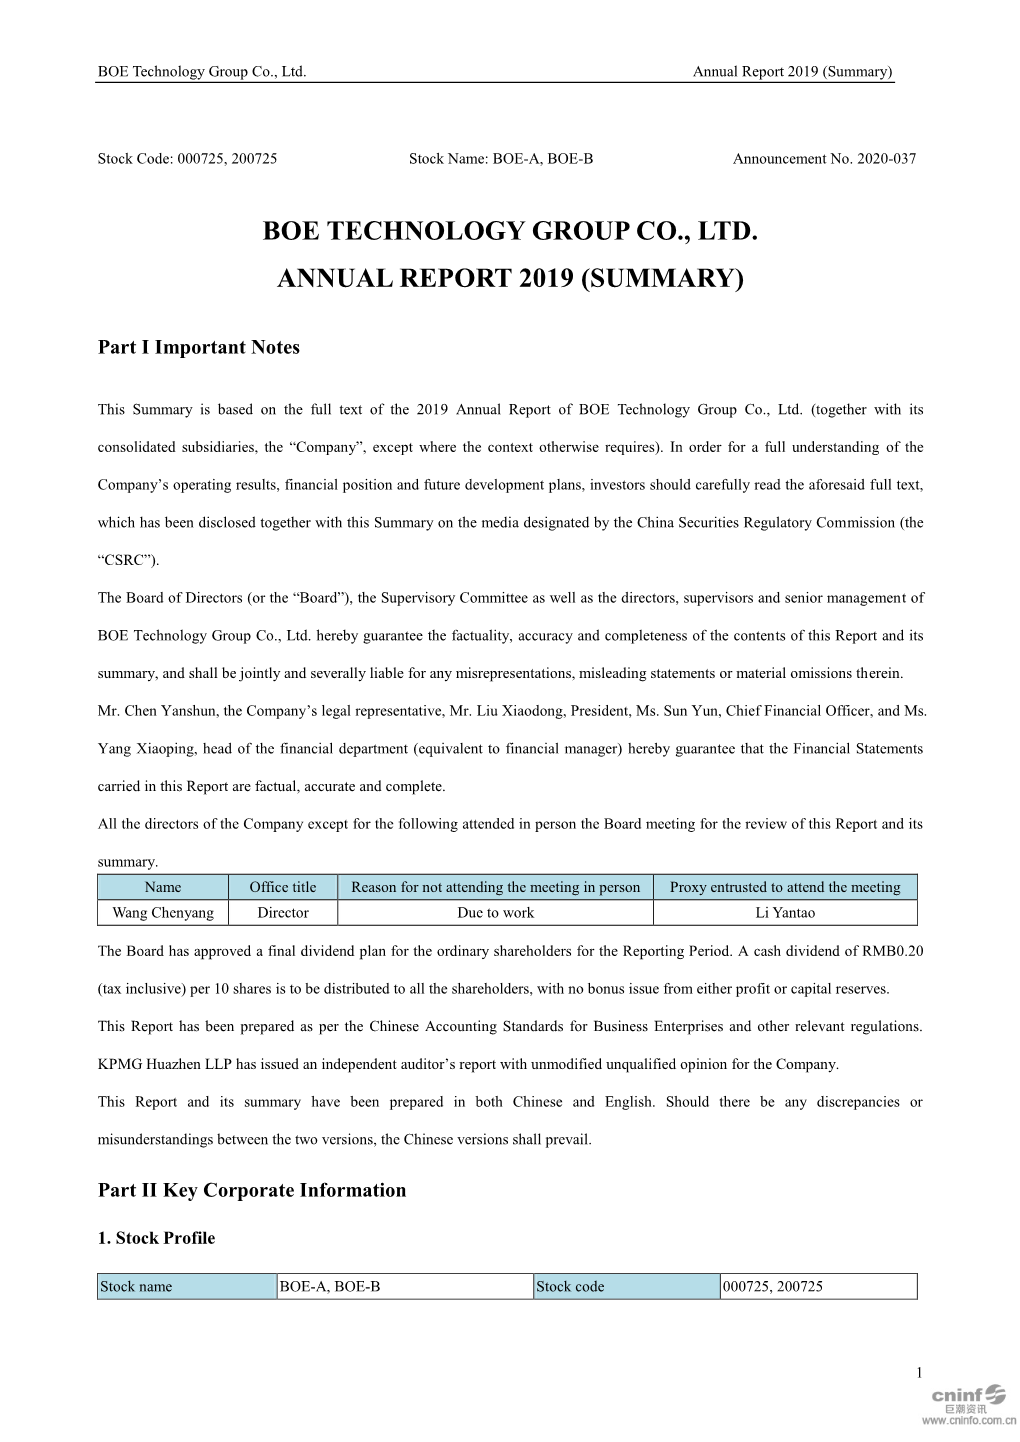 BOE Technology Group Co., Ltd. Annual Report 2019 (Summary)